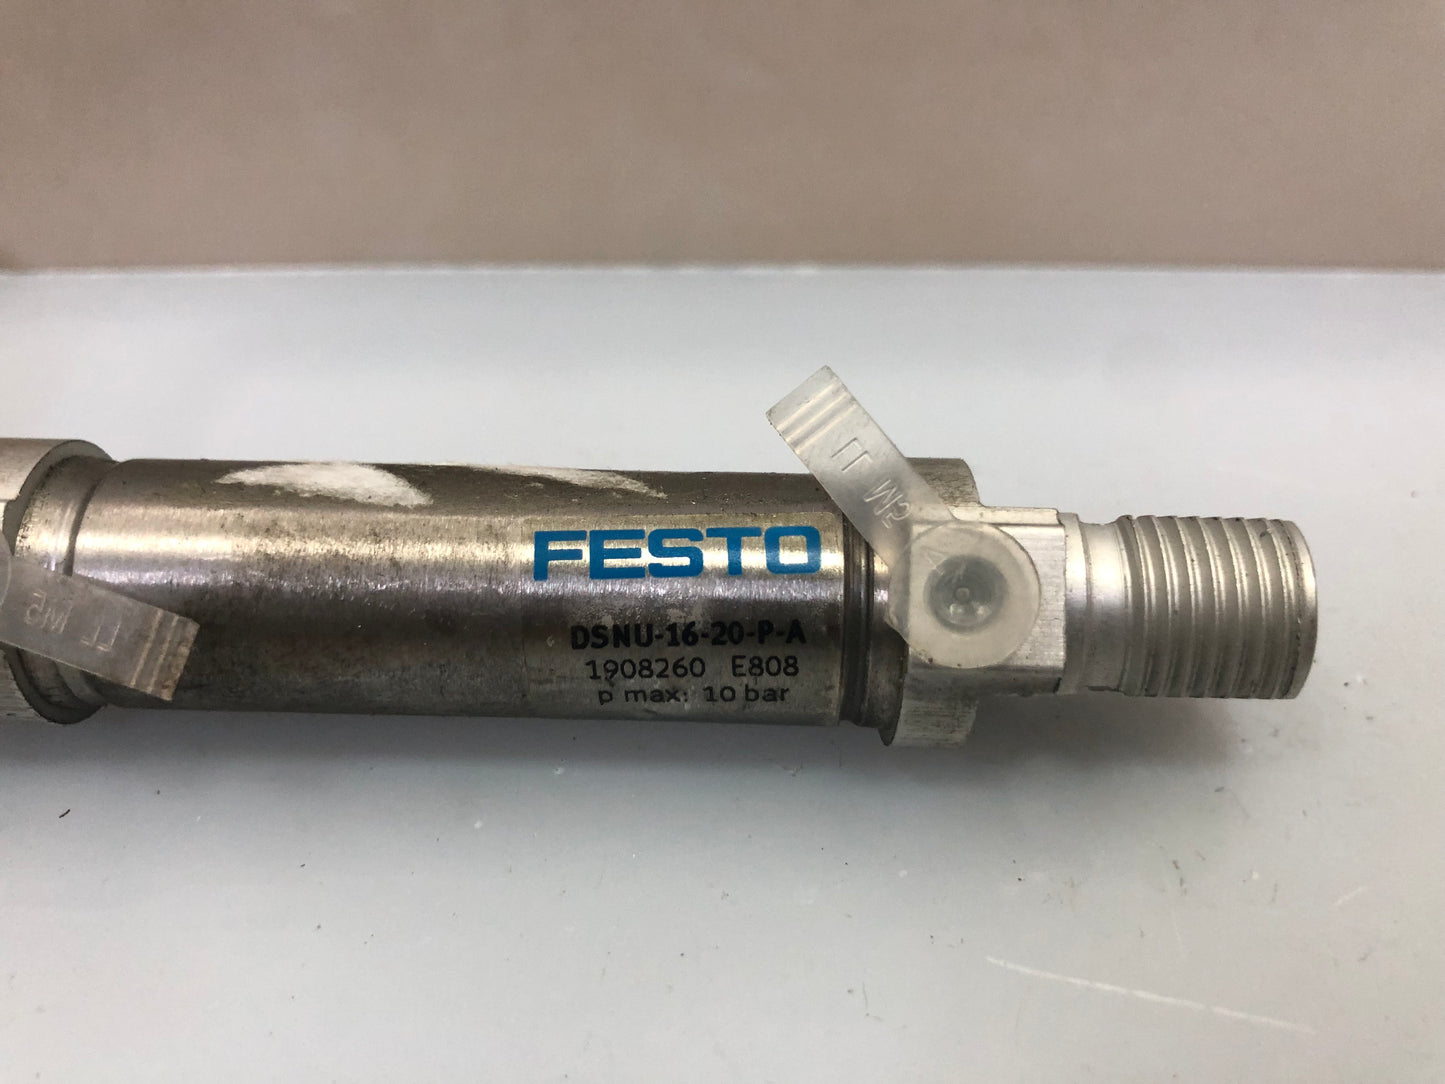 FESTO DSNU-16-20-P-A 1908260 Cylinder - New -